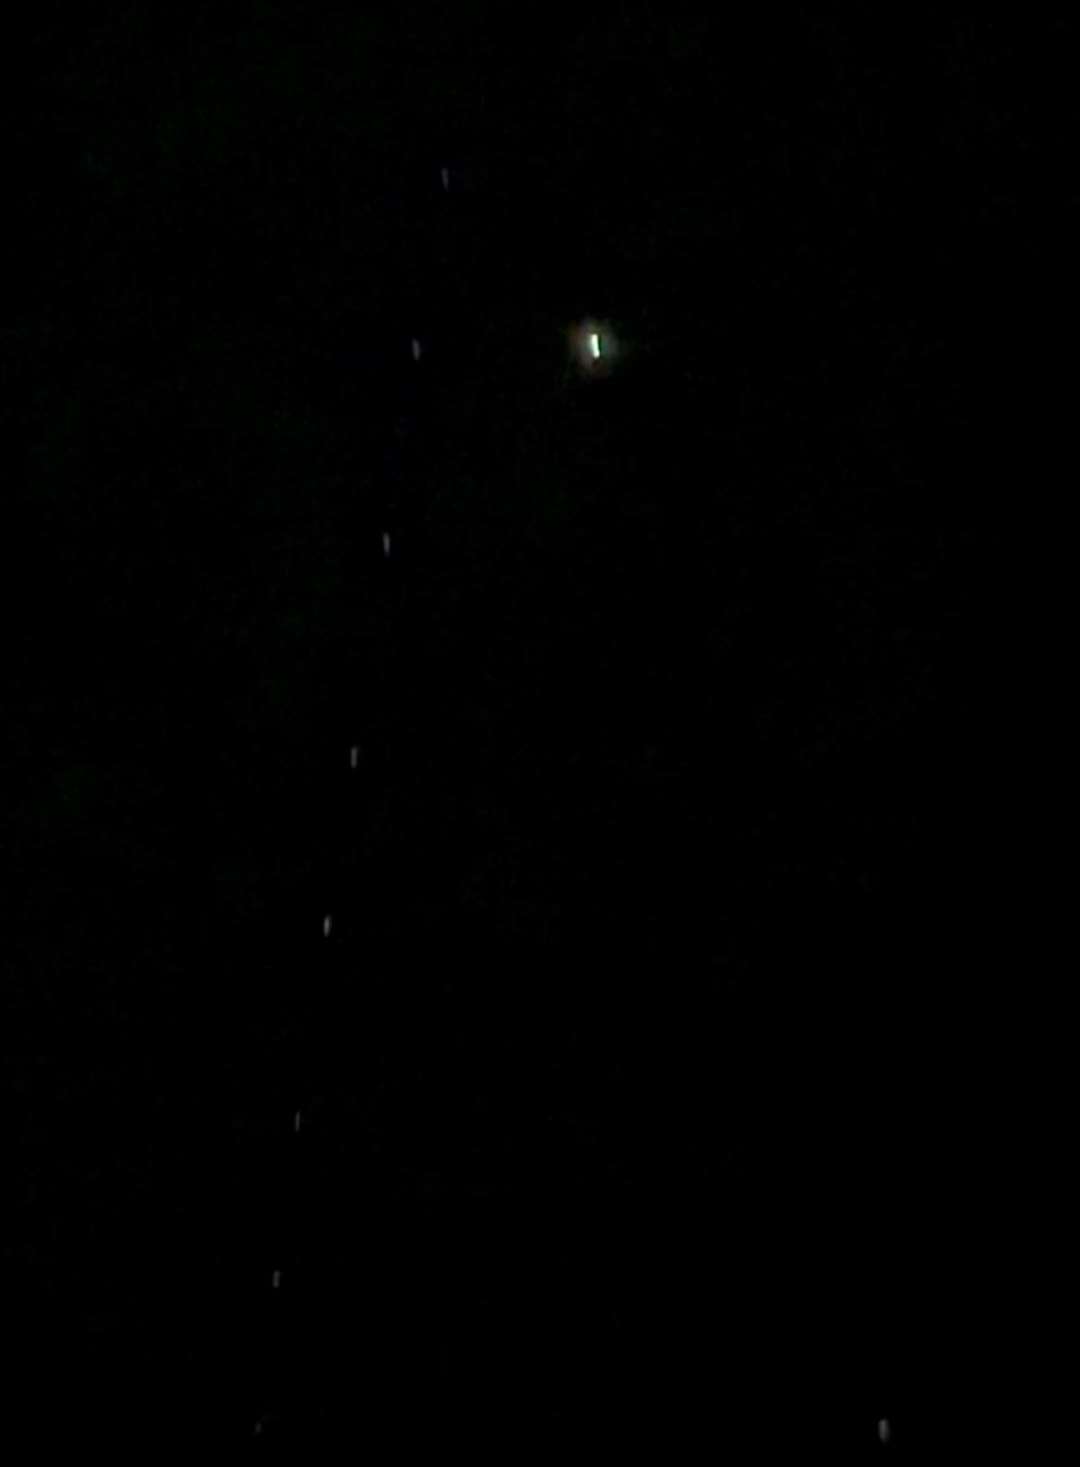 Elon Musk's Starlink satellites over Kingsnorth, Ashford last night